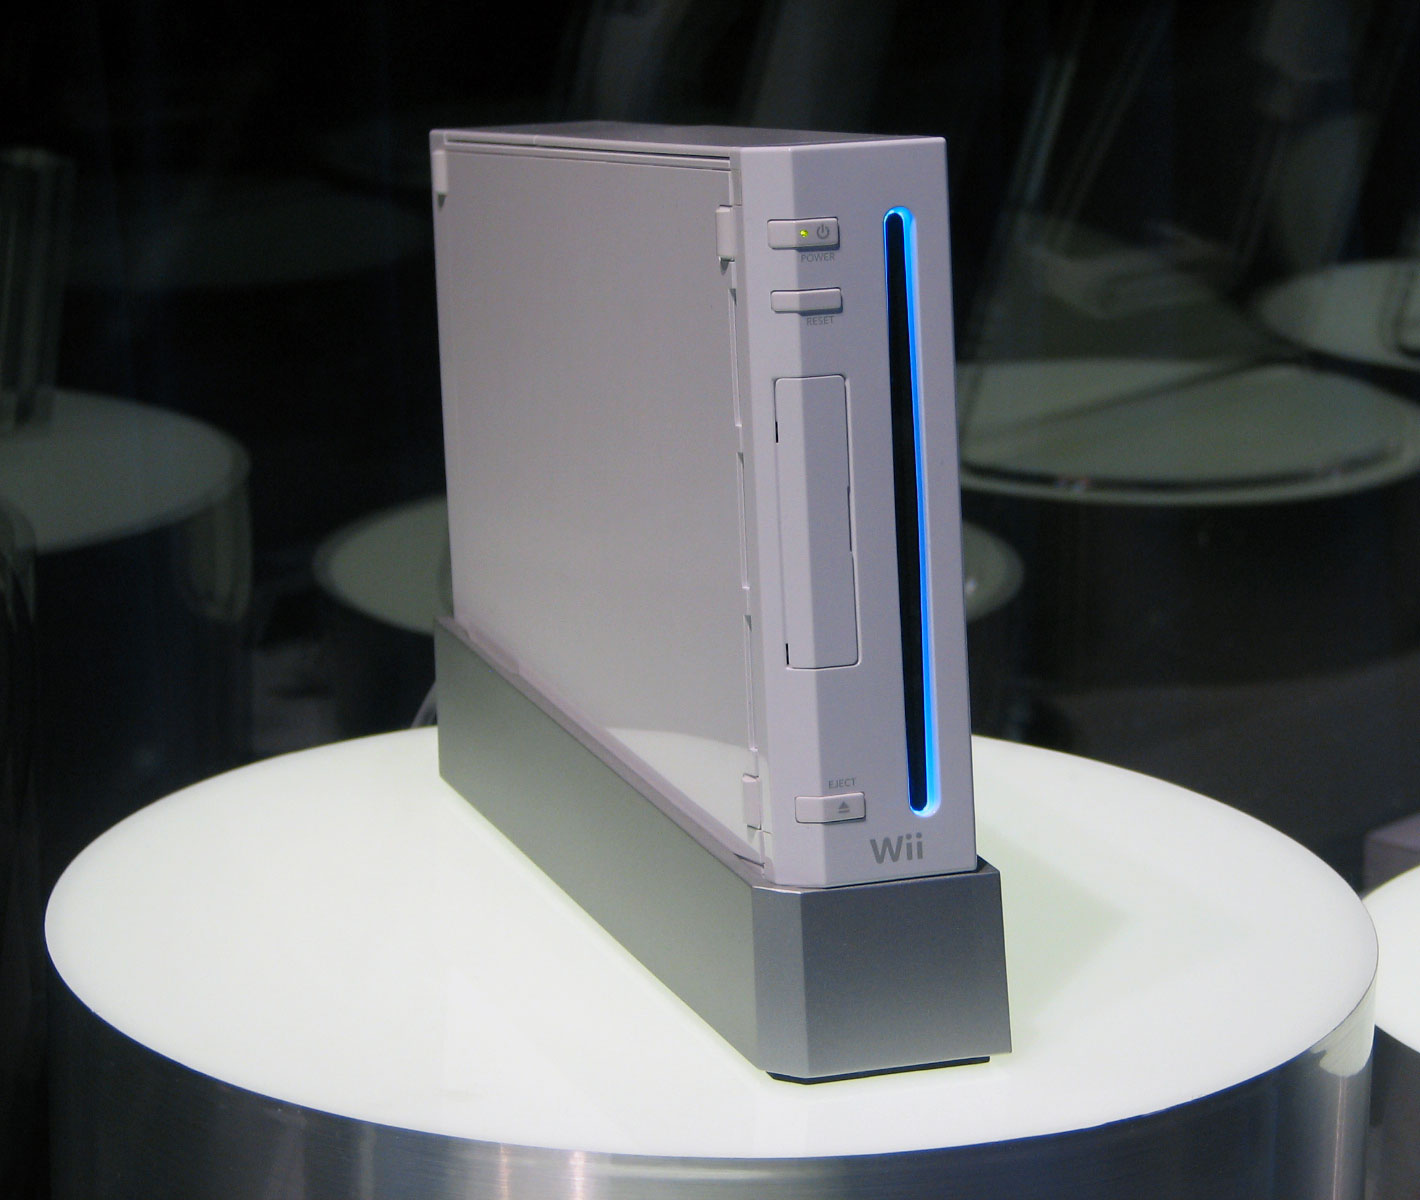 National folketælling Sanktion konstant Nintendo Wii - E3 2006: Hands on with Nintendo's Wii and new Dell Designs